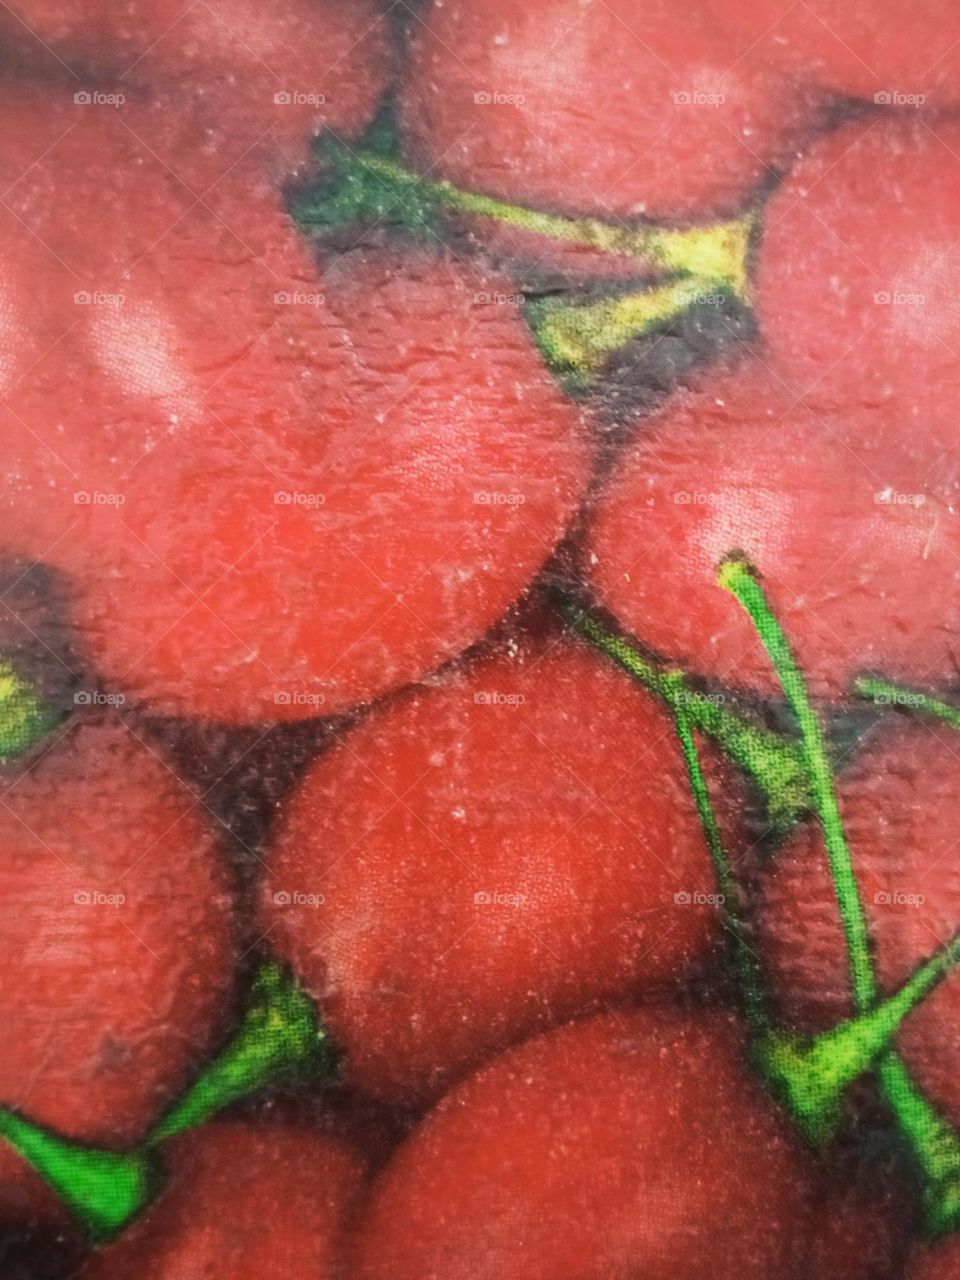 Red cherrys